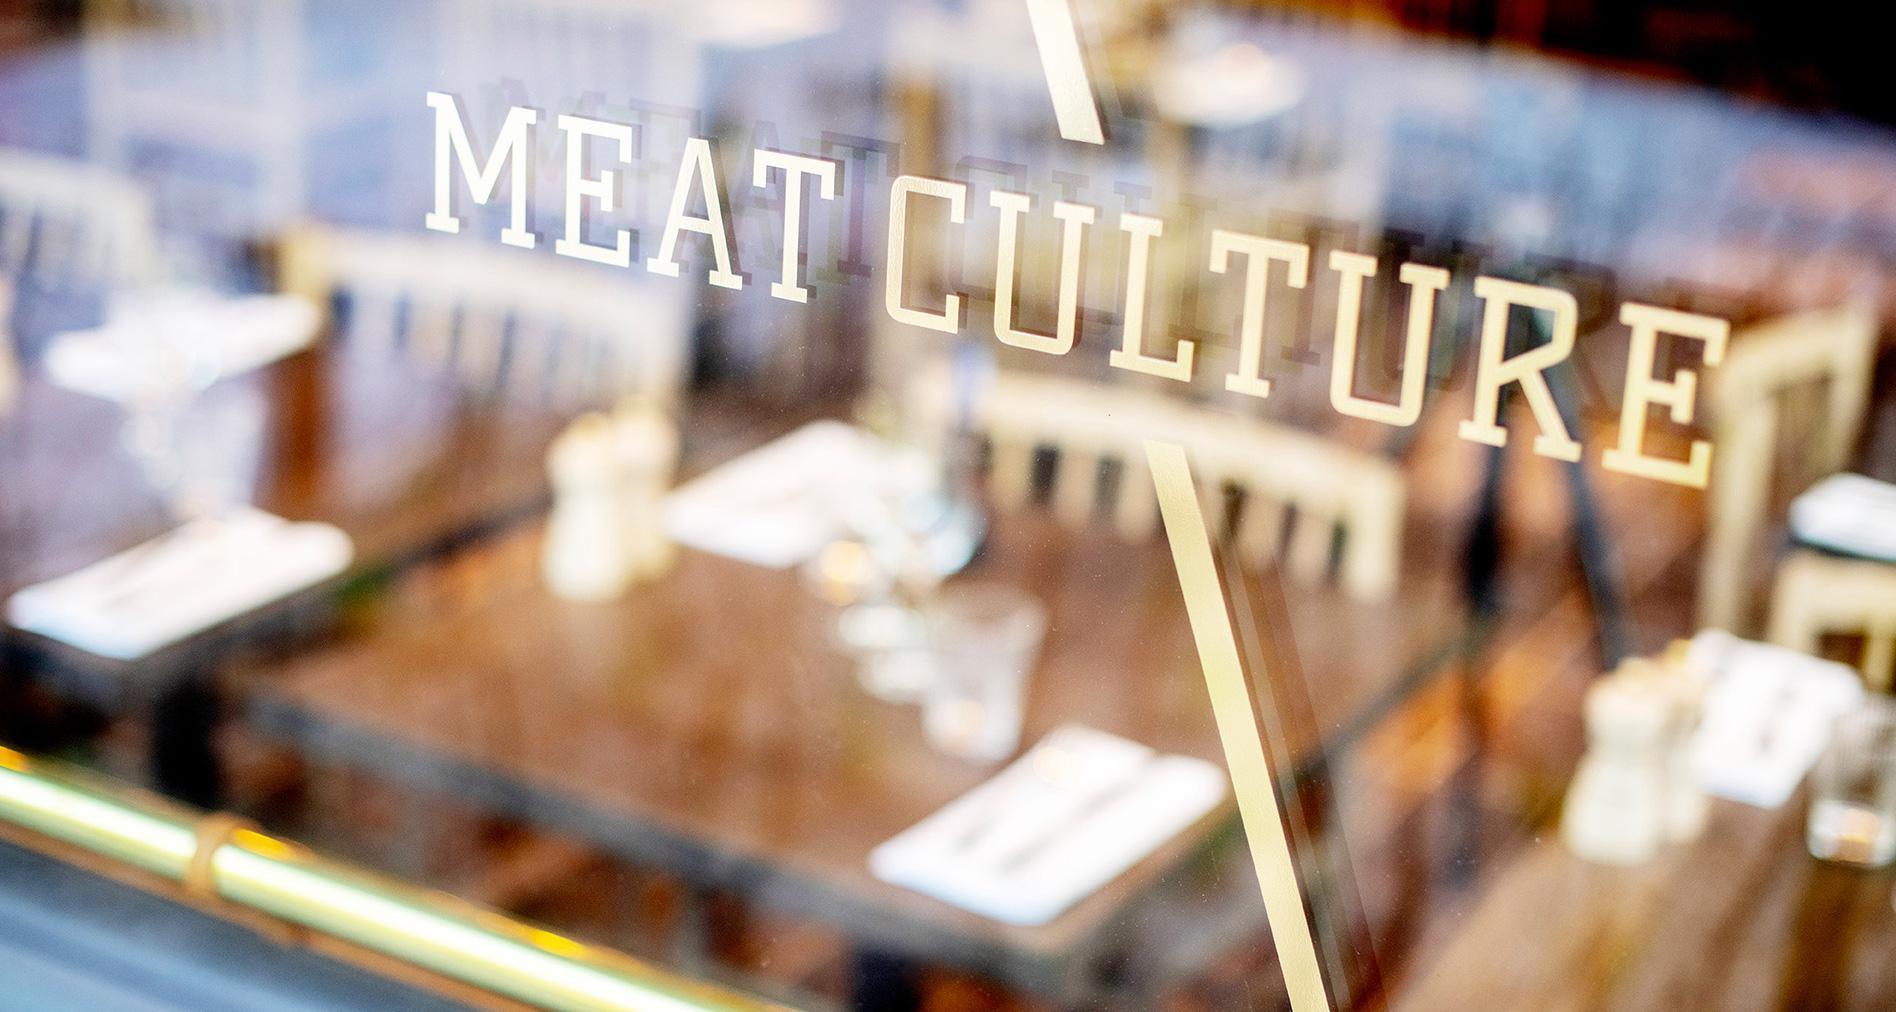 Meat culture